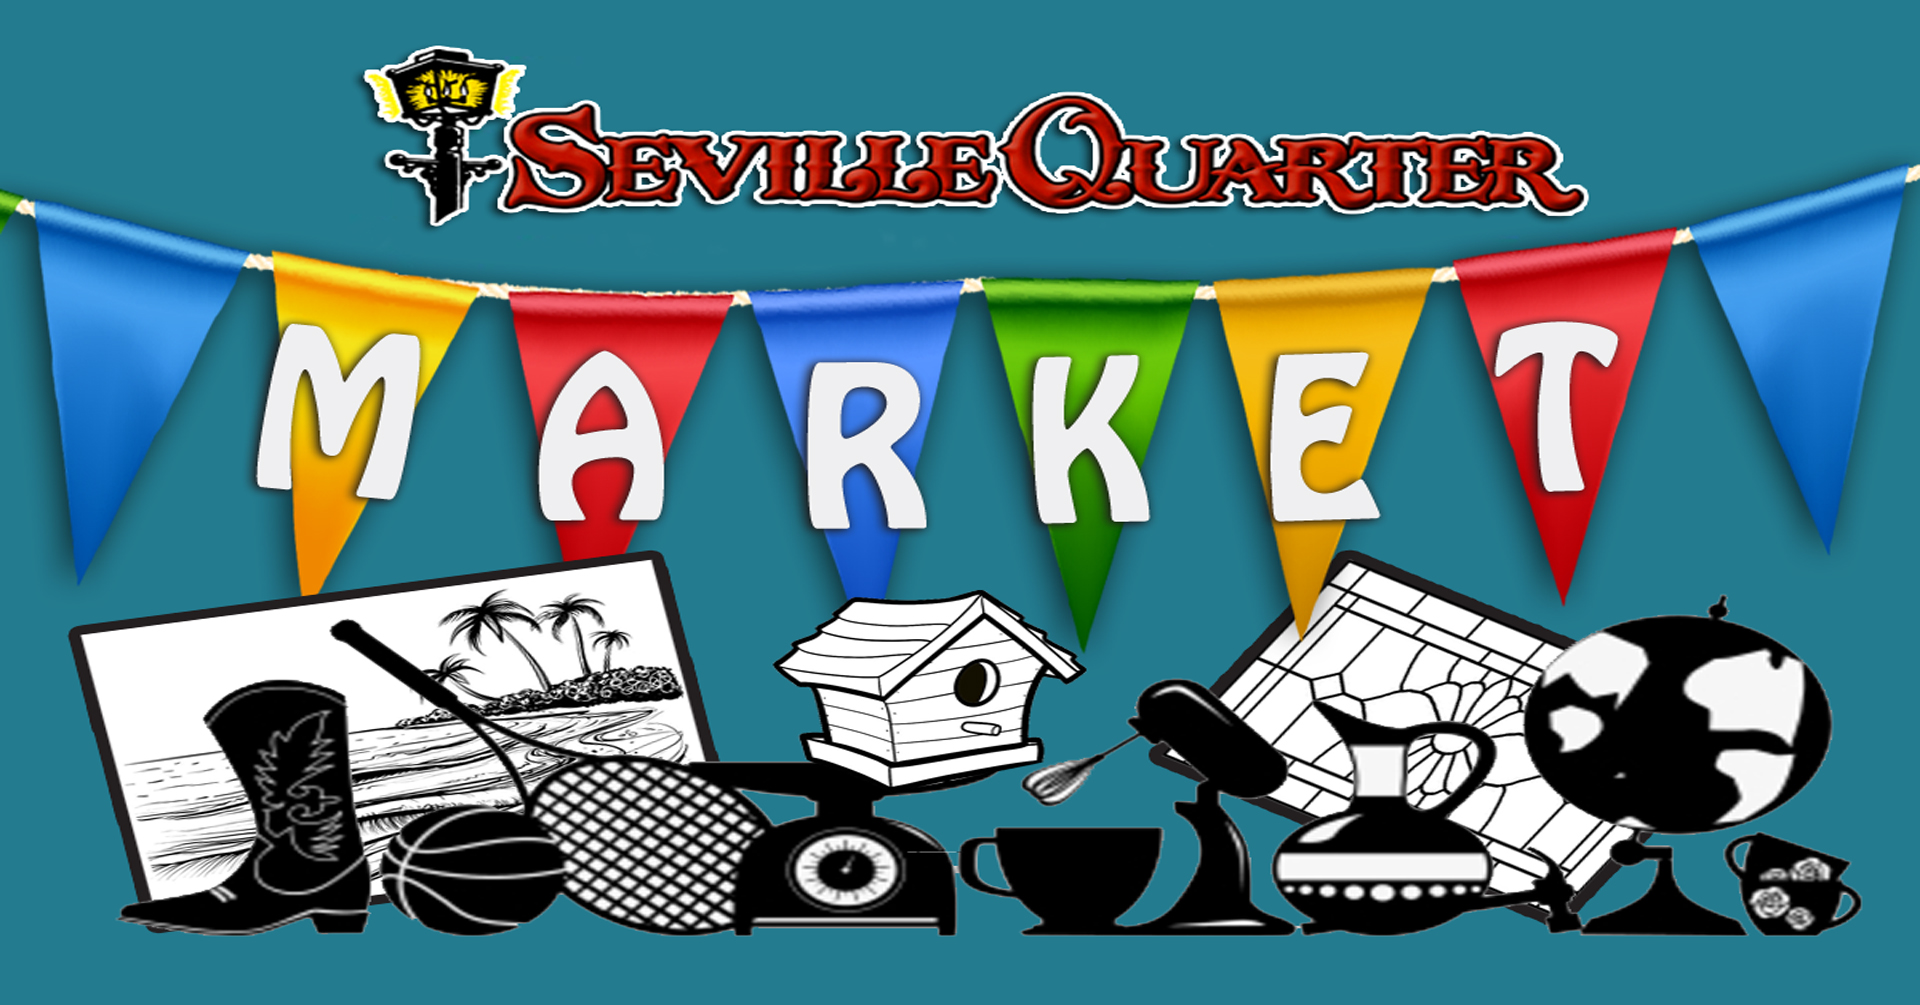  Seville Quarter Market